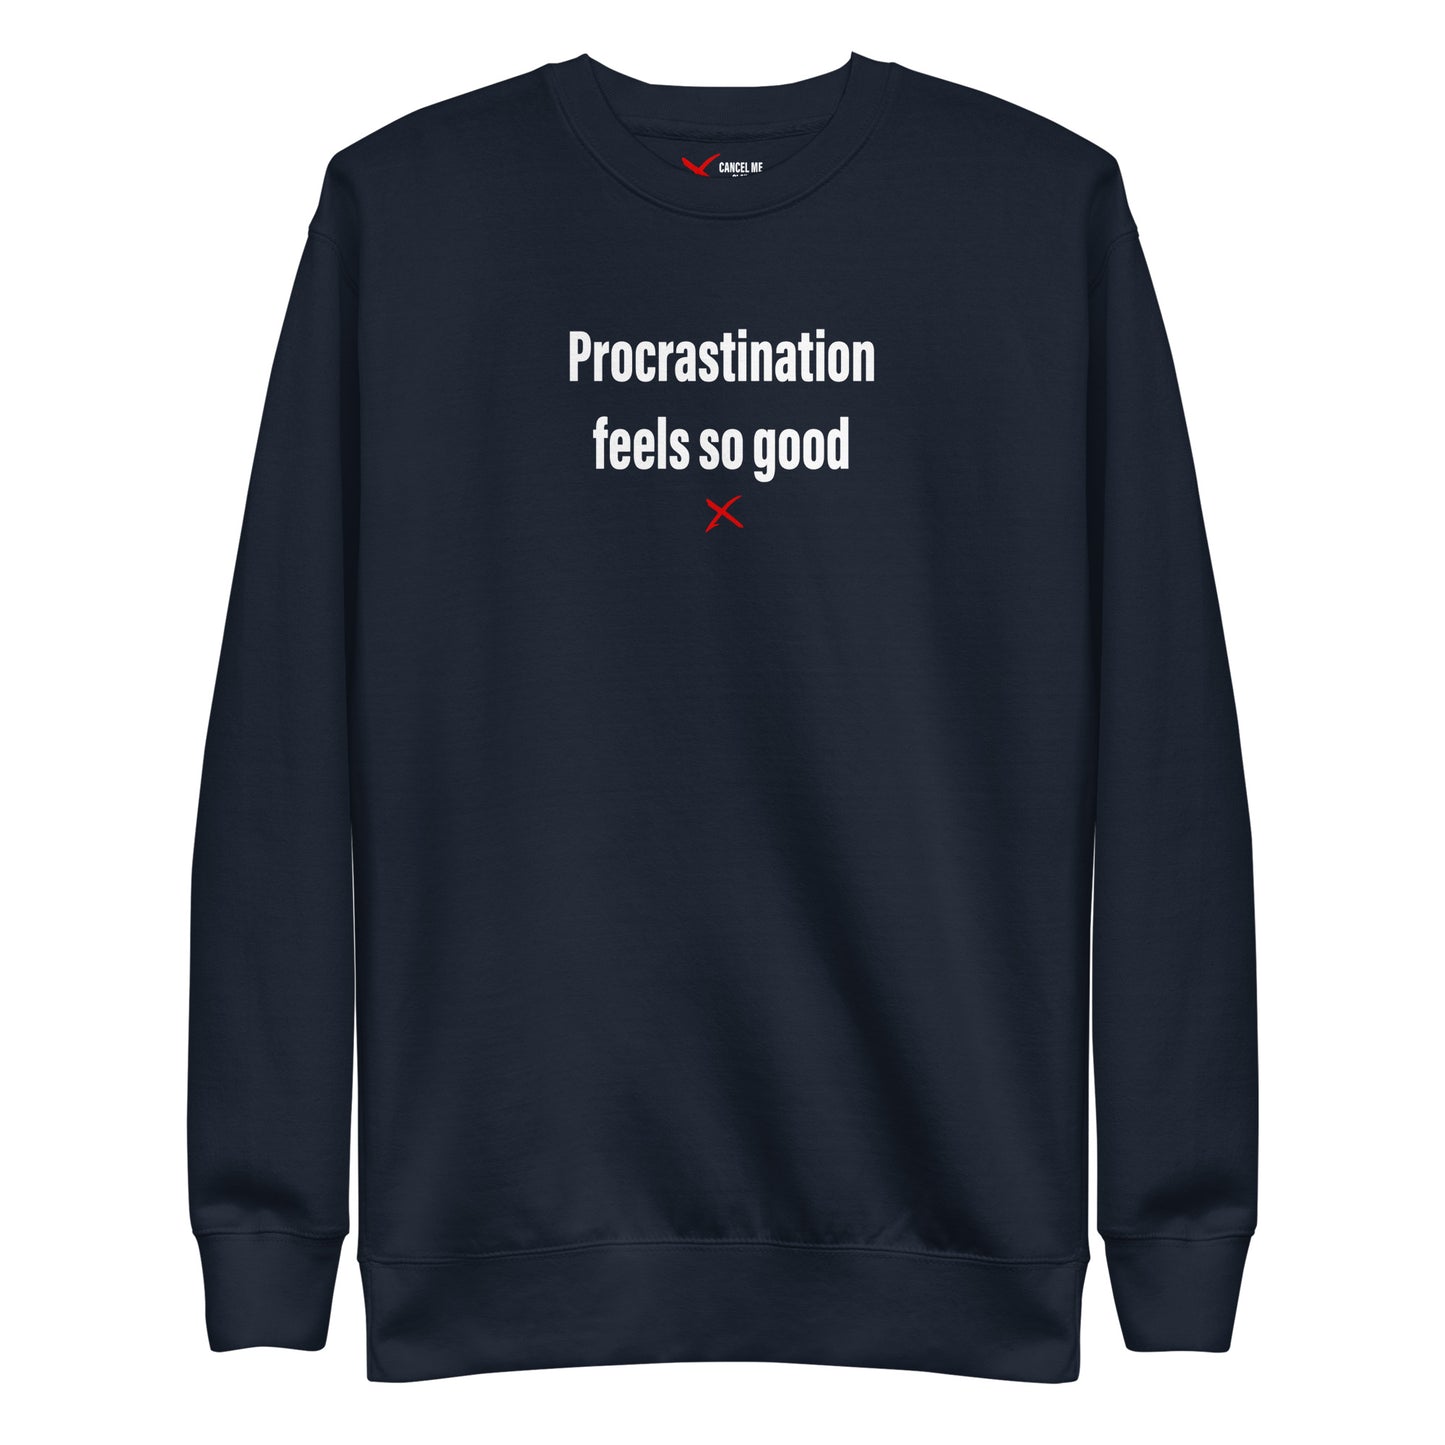 Procrastination feels so good - Sweatshirt